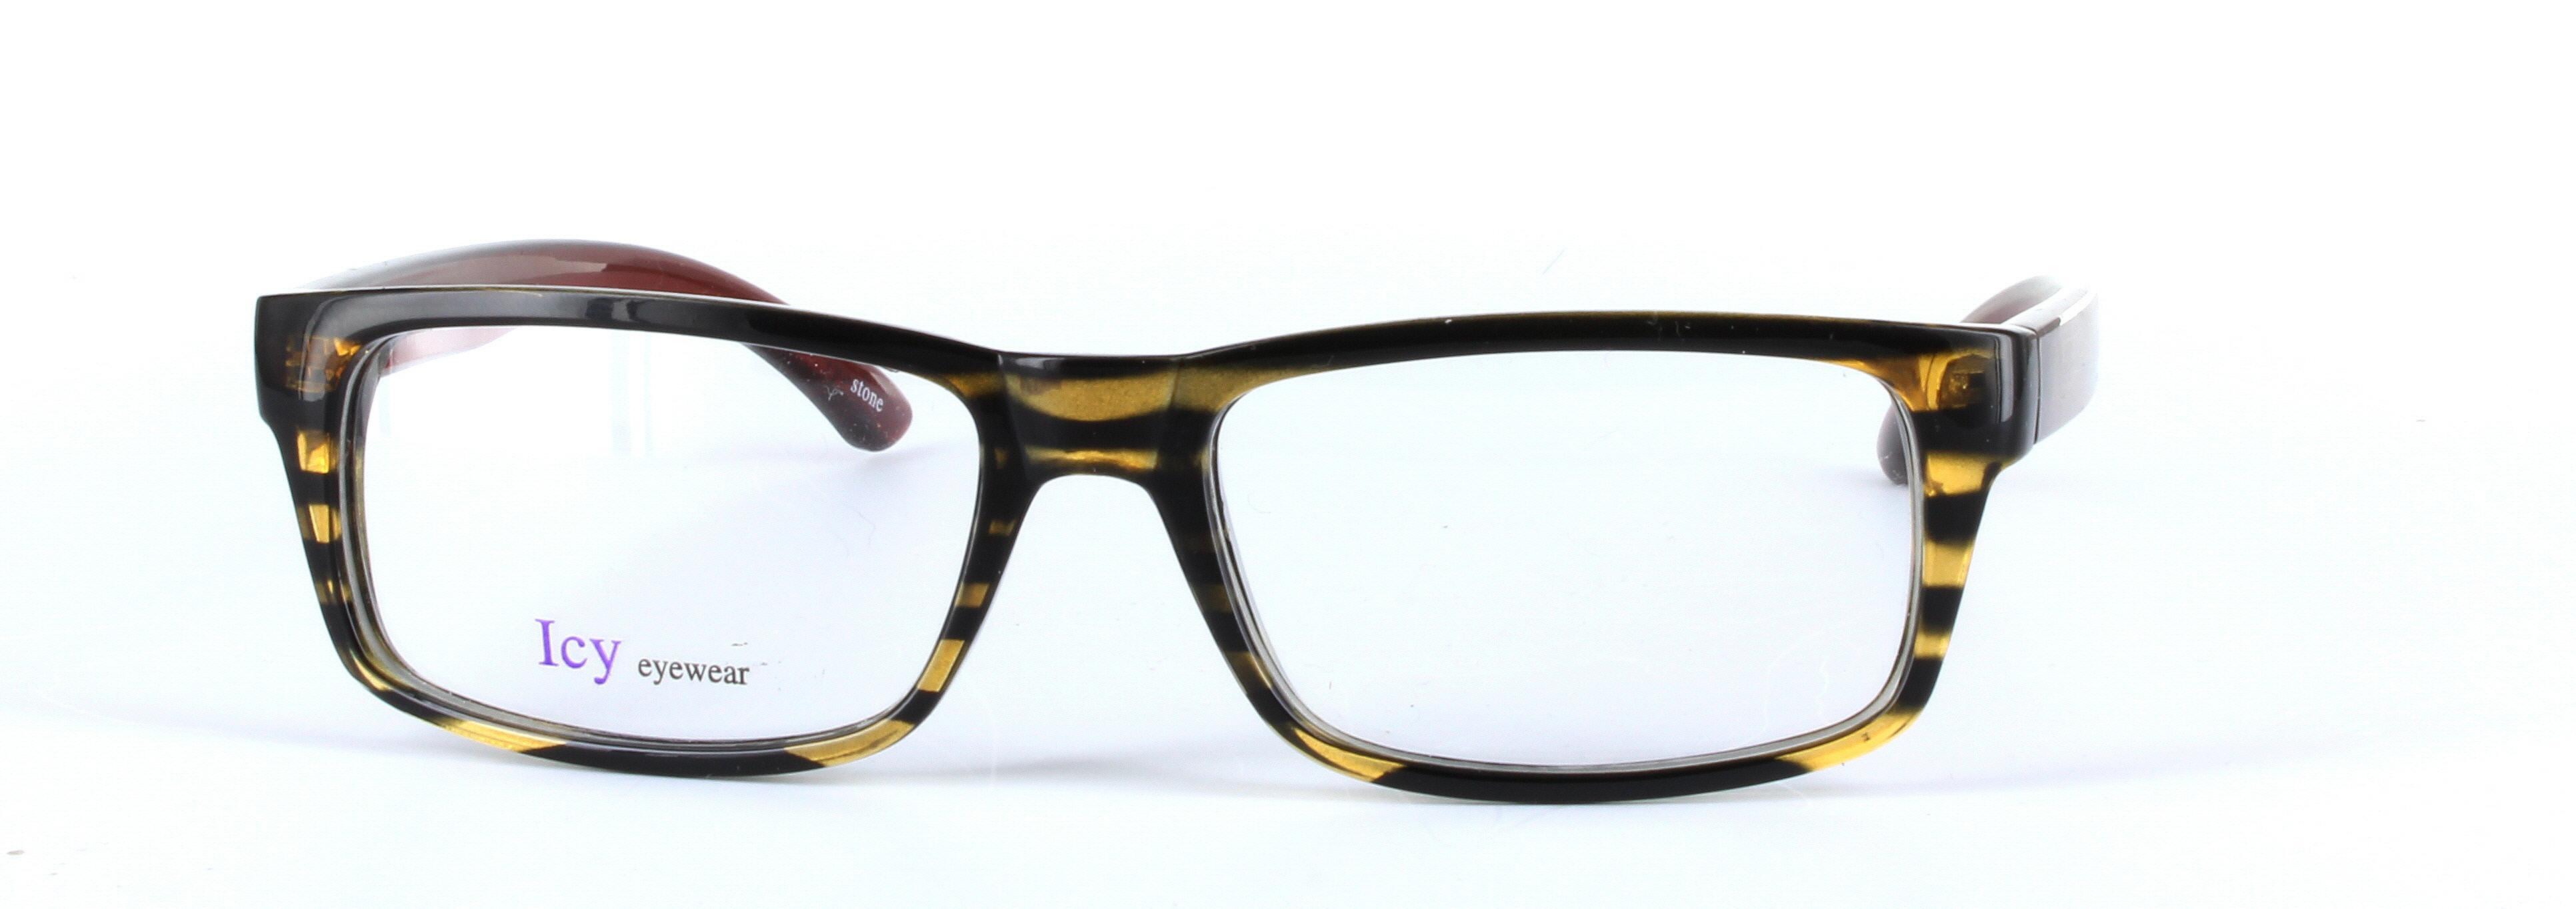 ICY 160 Brown Full Rim Rectangular Square Plastic Glasses - Image View 5